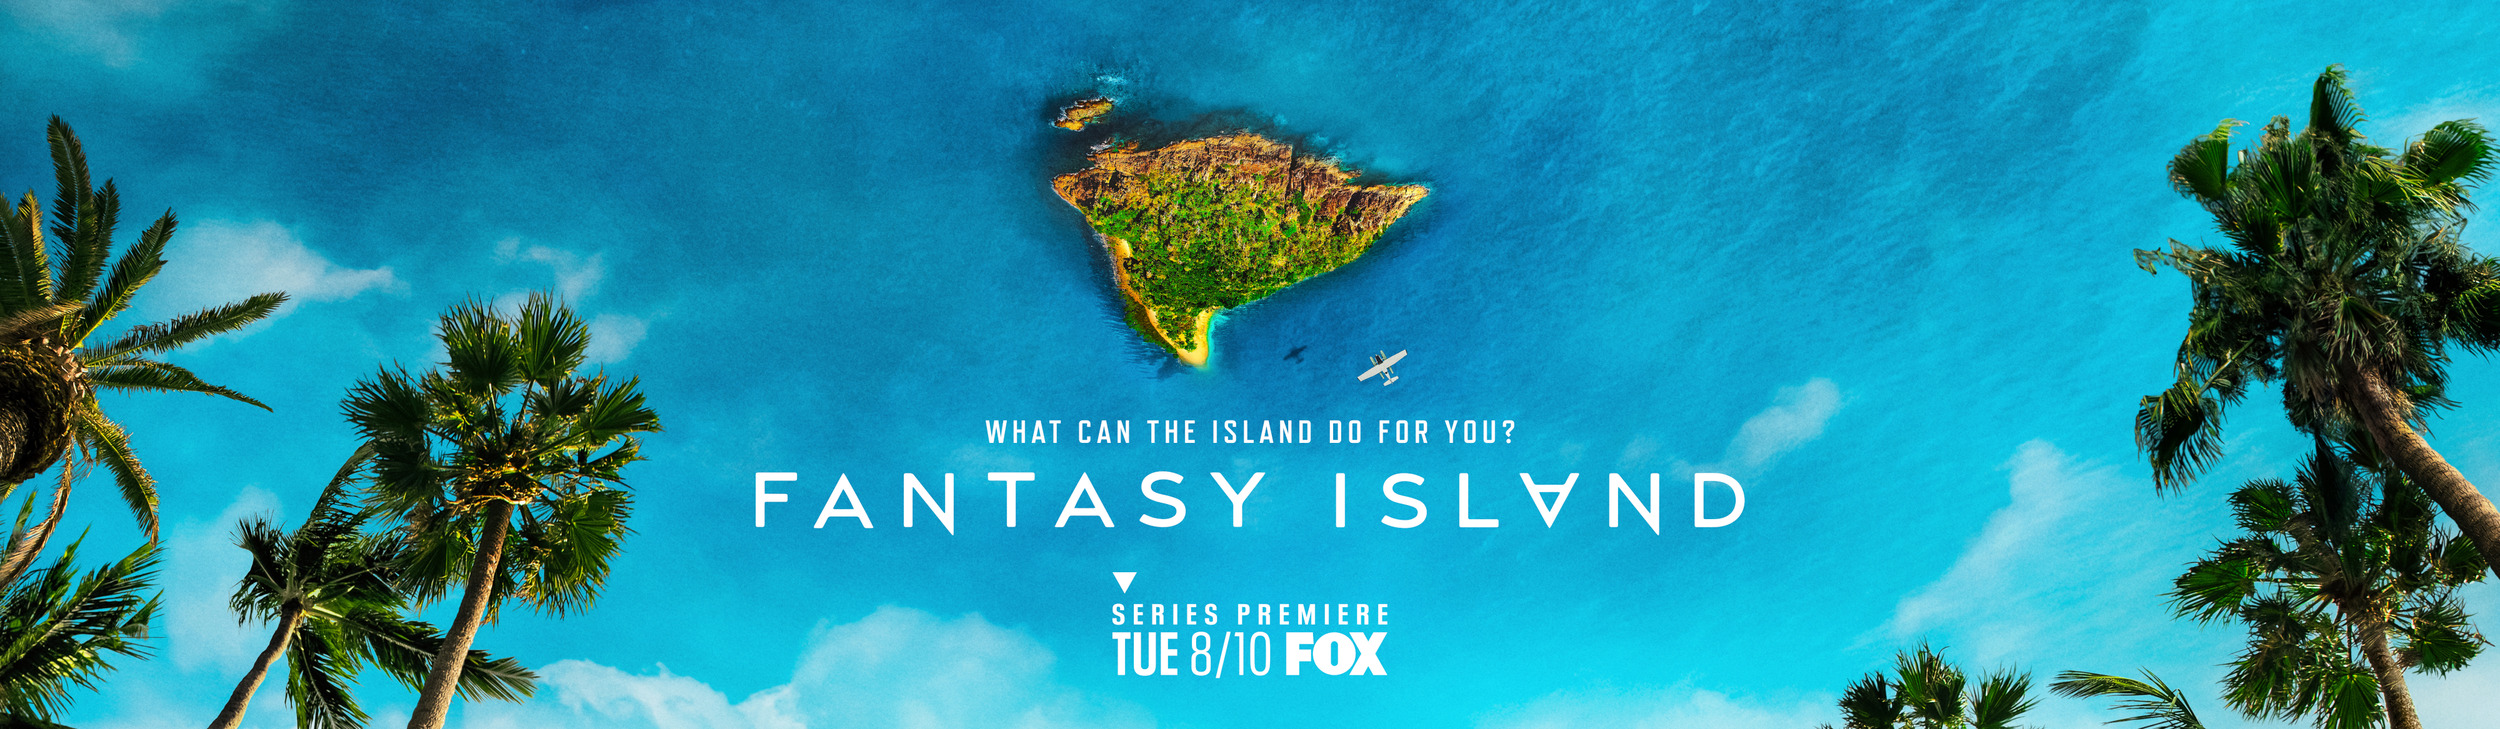 Mega Sized Movie Poster Image for Fantasy Island (#2 of 4)